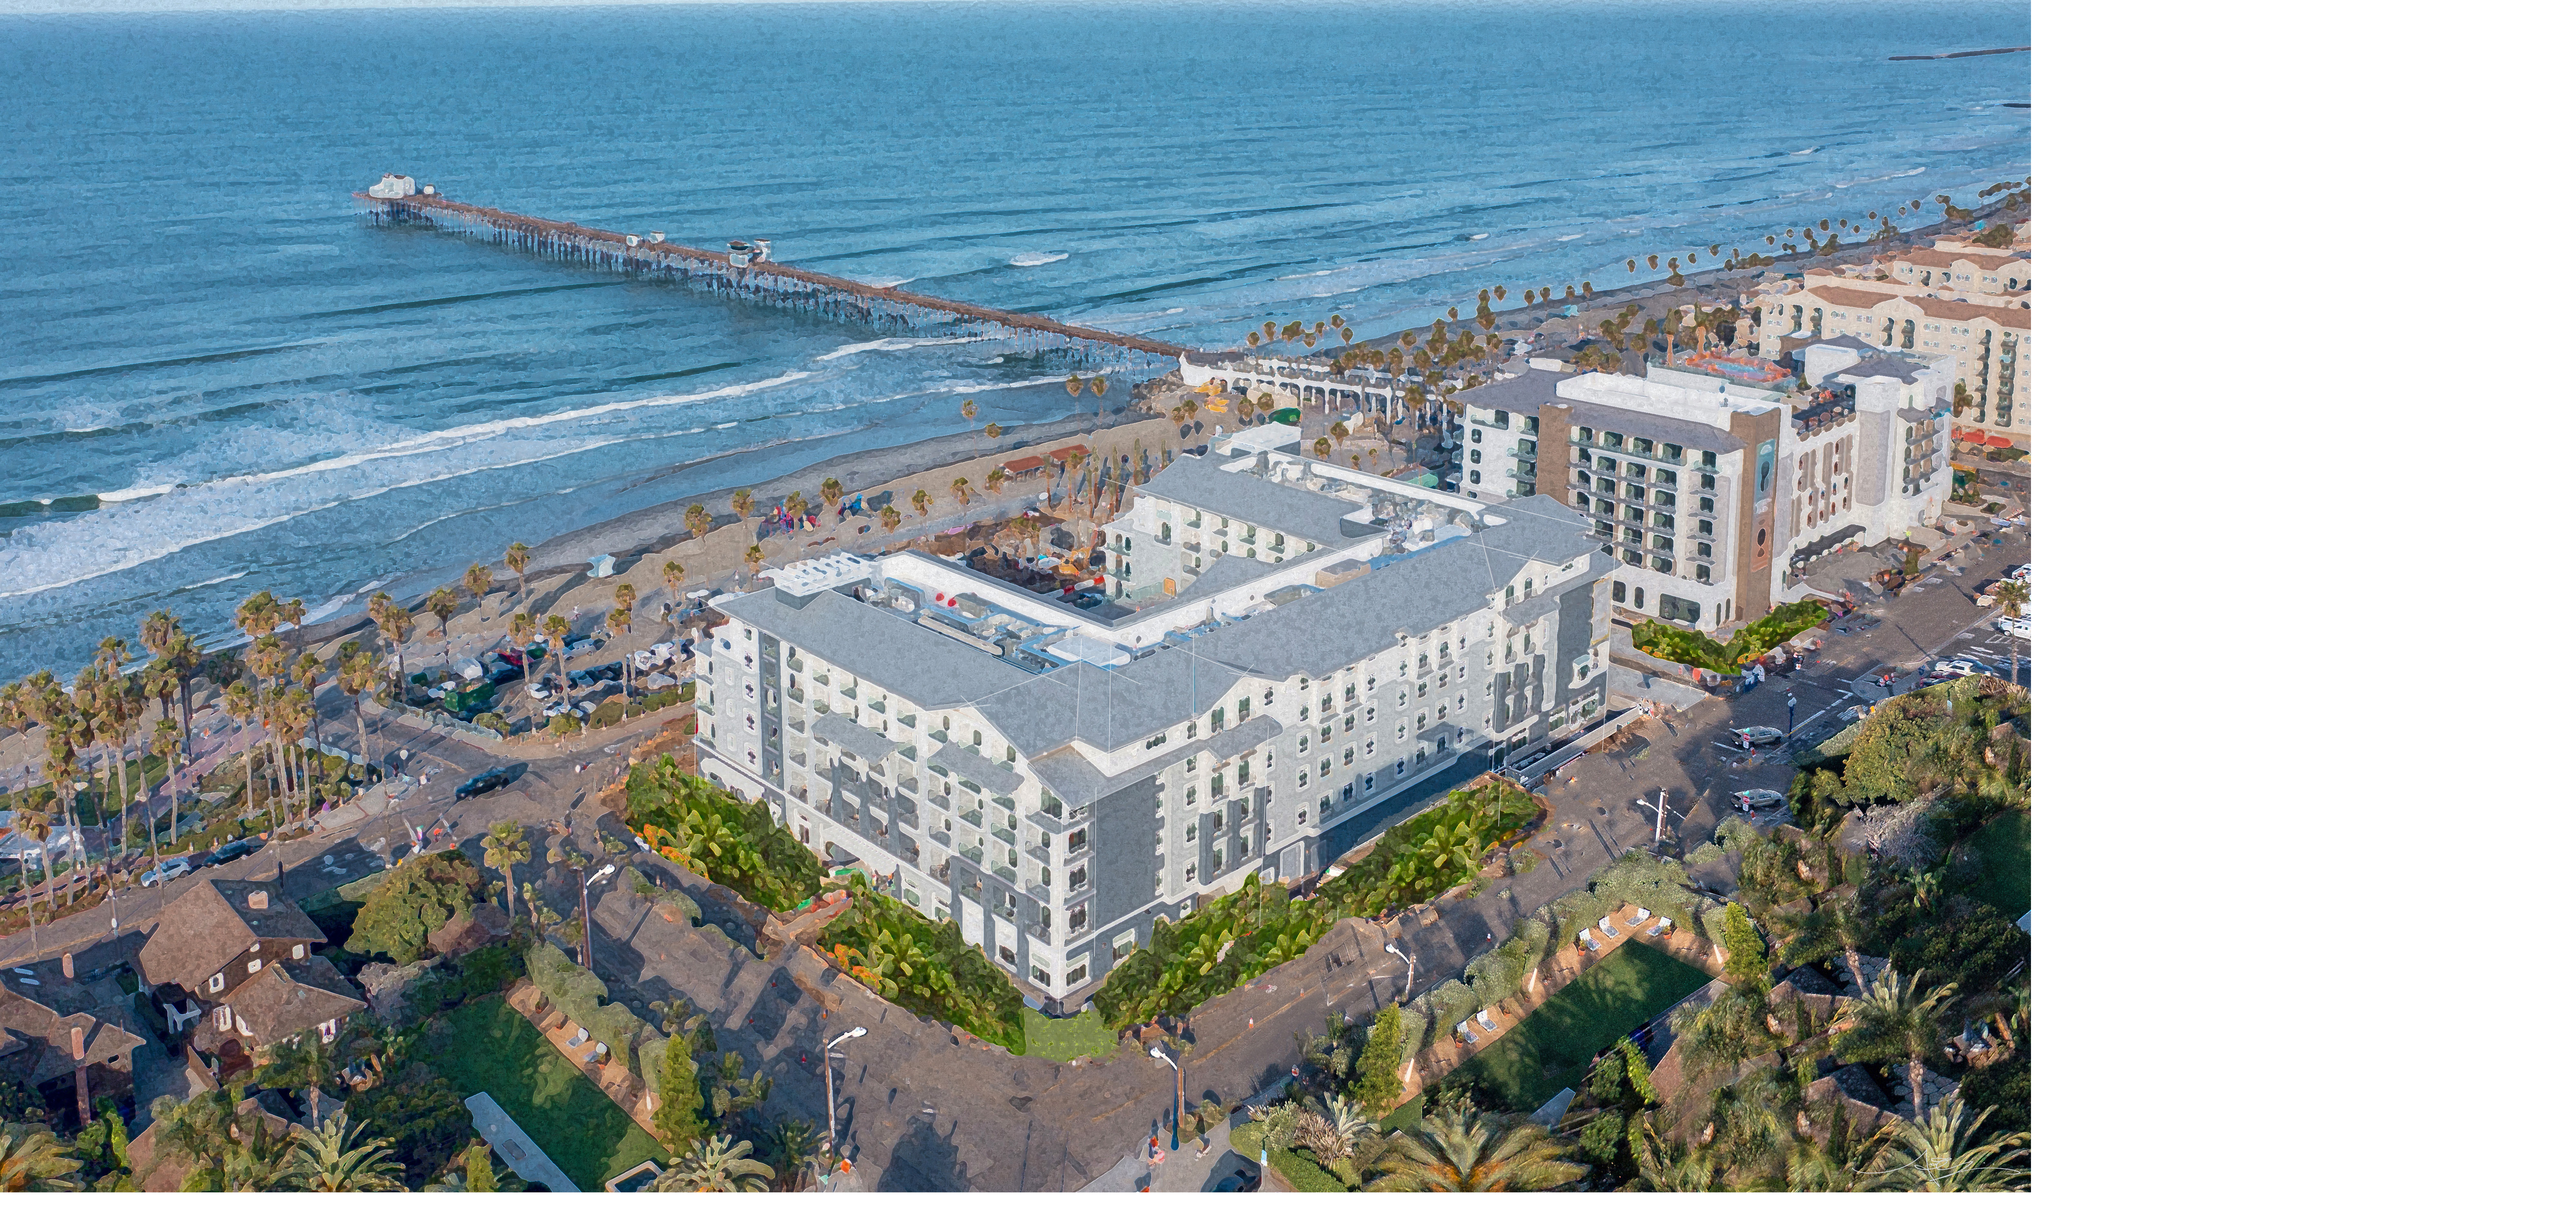 The Seabird Resort  Beachfront Hotel In Oceanside, CA